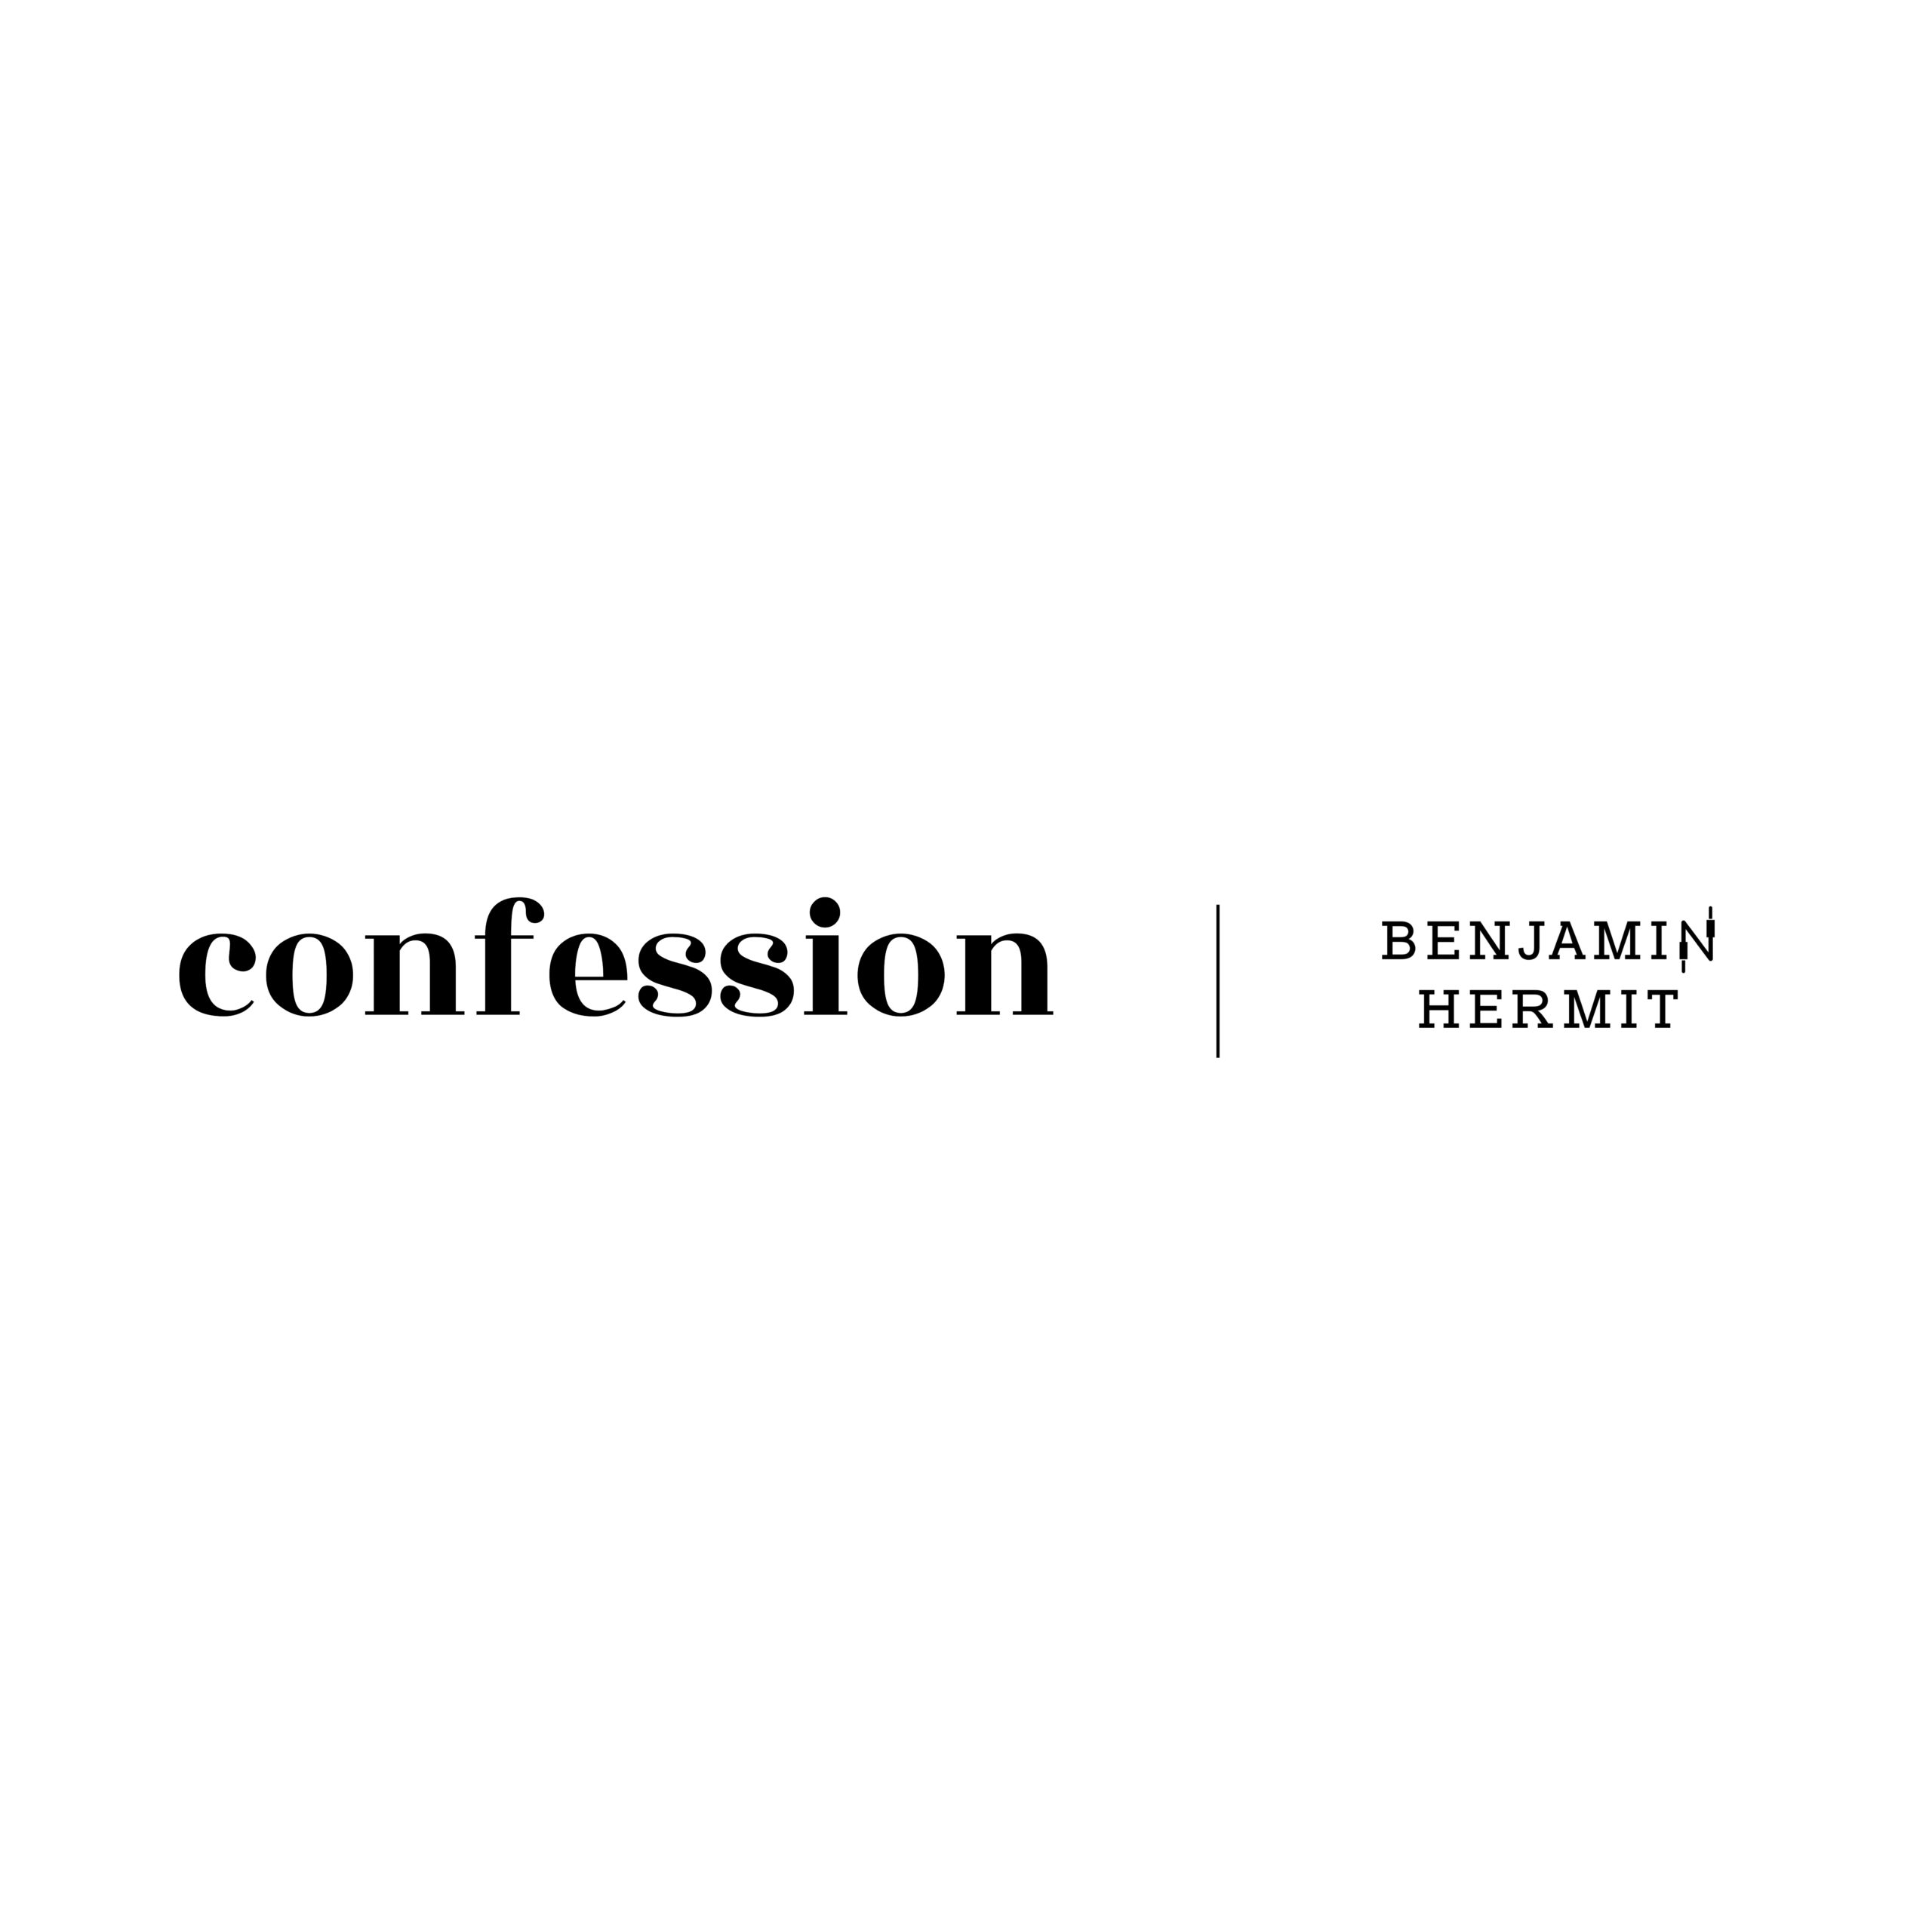 BENJAMIN HERMIT / confession